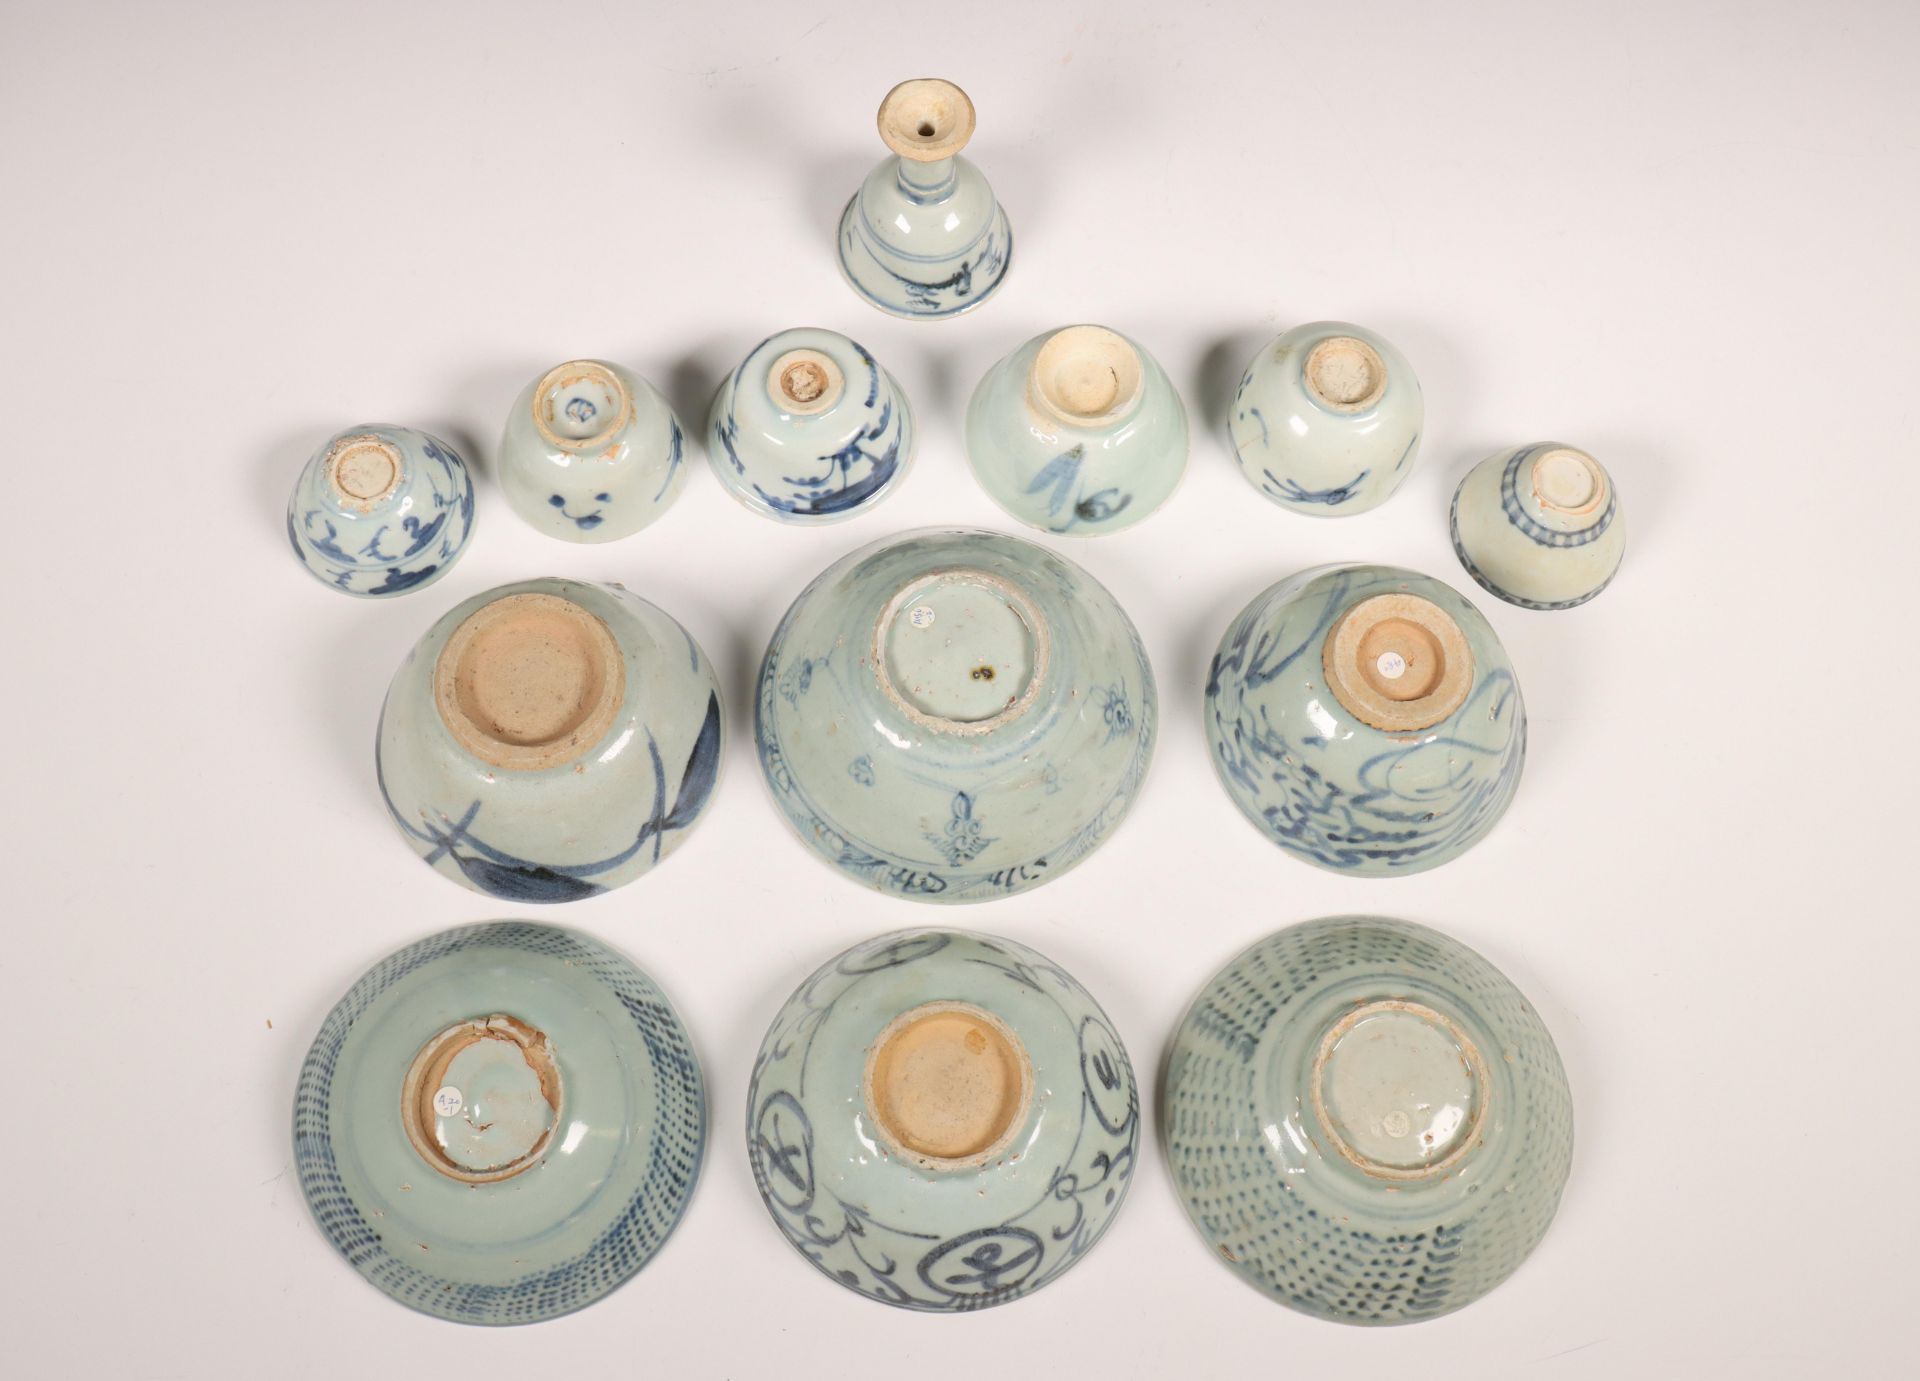 China, collectie blauw-wit porseleinen kommen en lepels, mogelijk Ming-dynastie en later, - Bild 4 aus 4